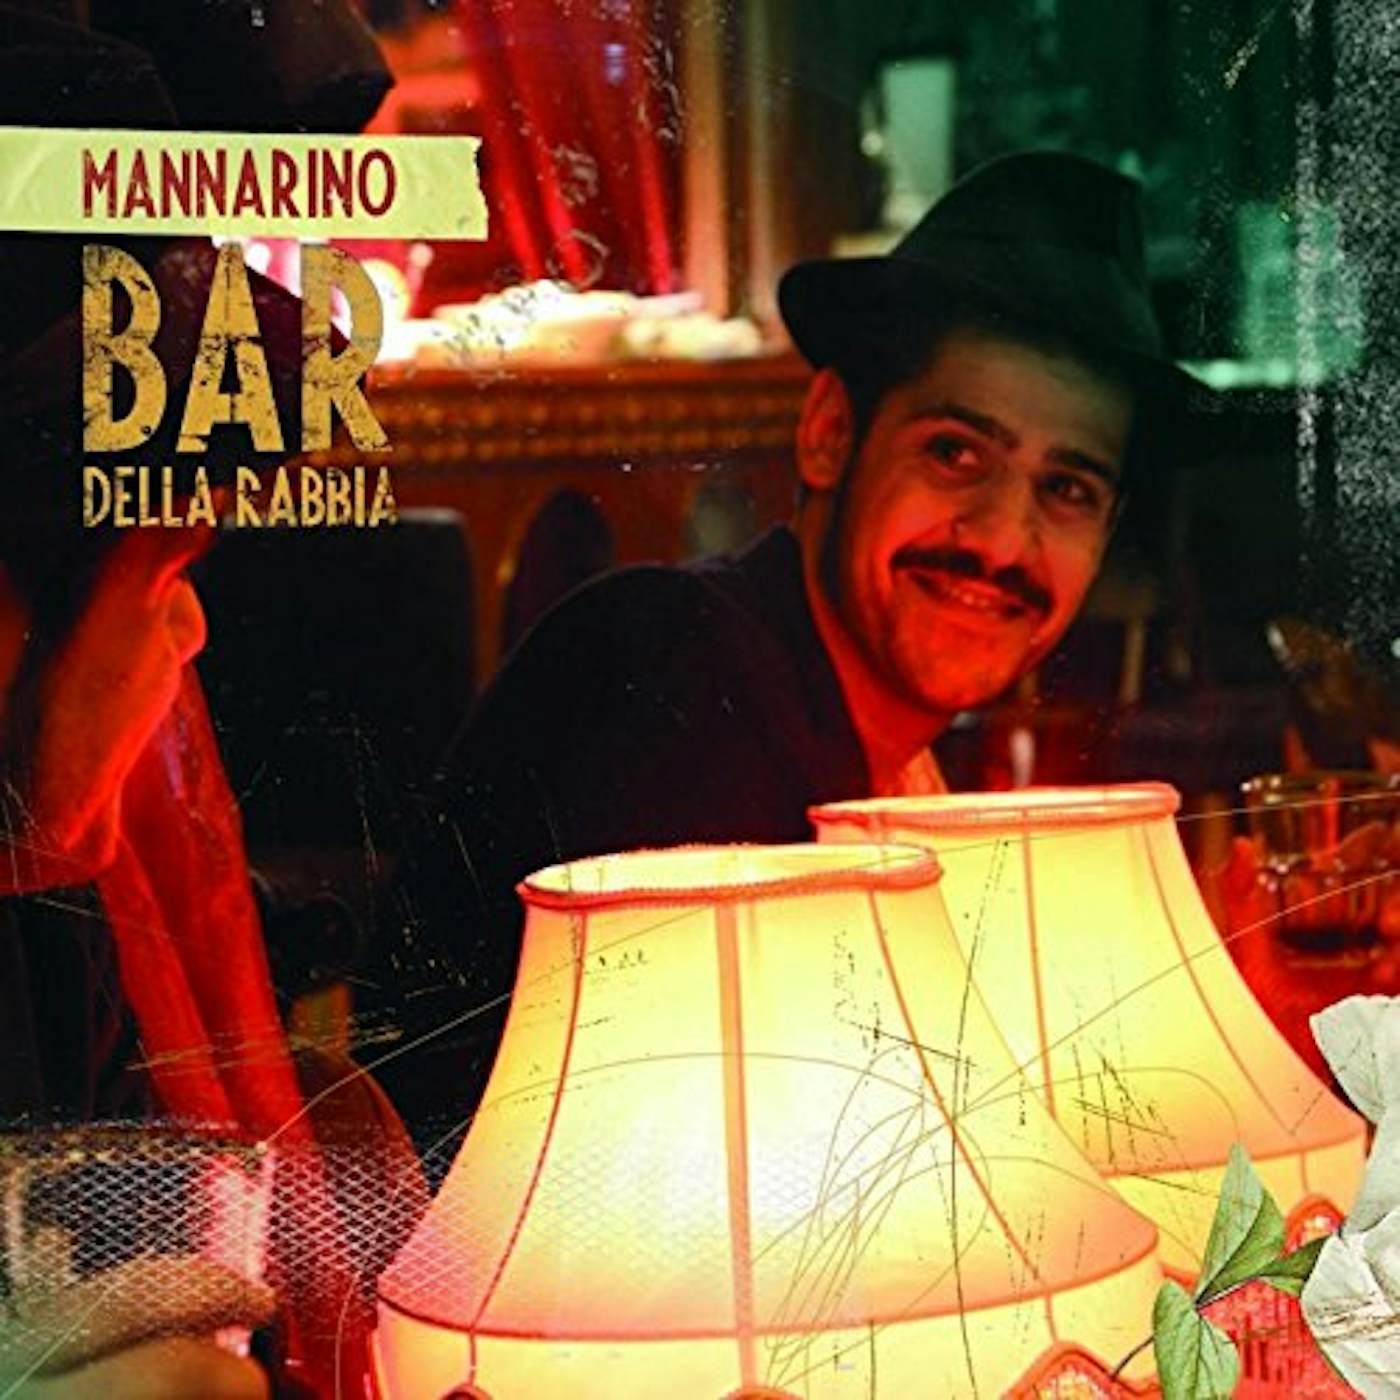 Bar Della Rabbia Vinyl Record - Mannarino